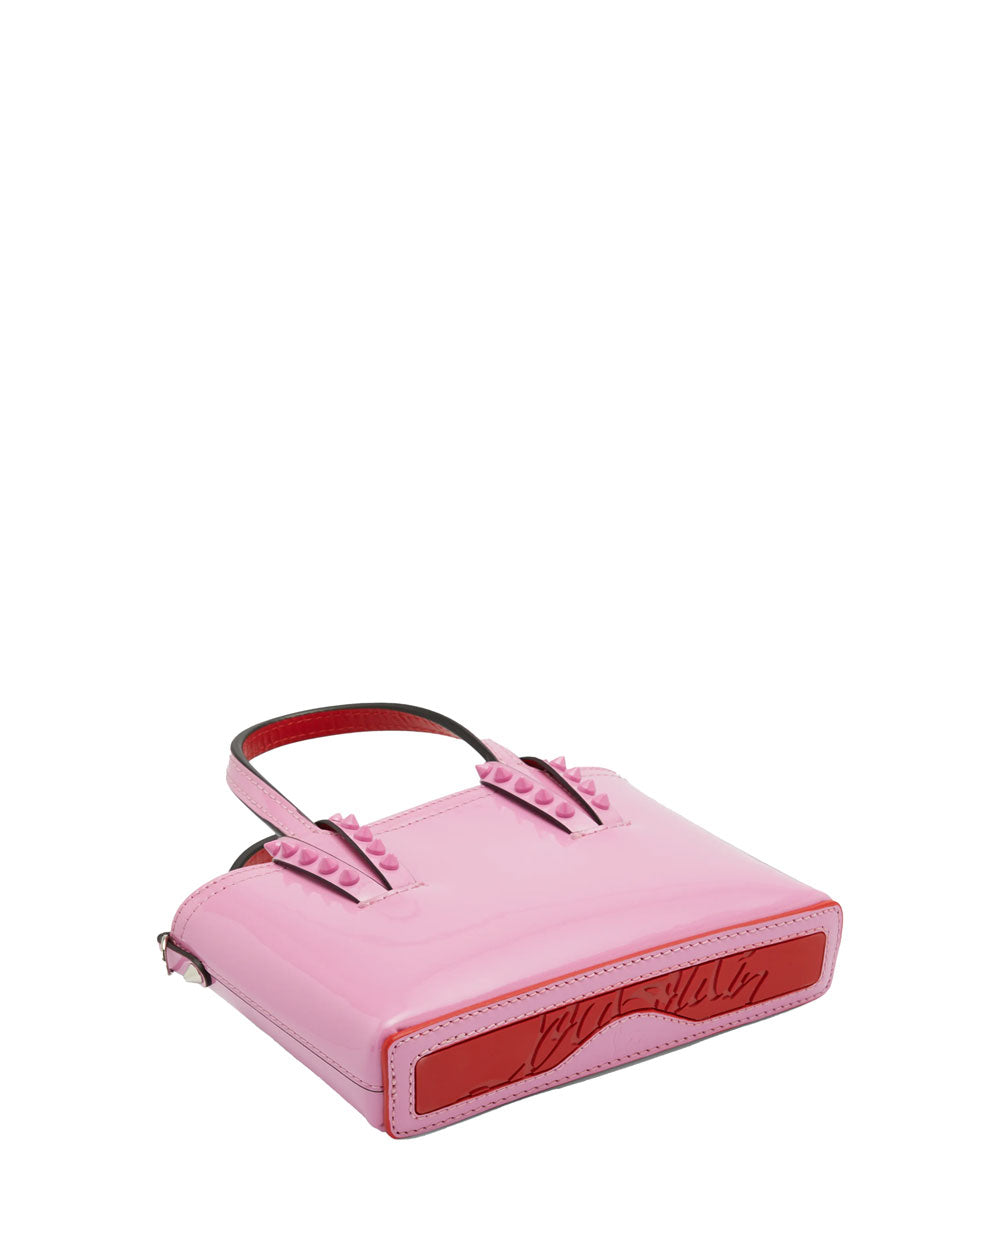 New Christian Louboutin Cabata Nano Hot Gummy Pink Tote Bag New in box